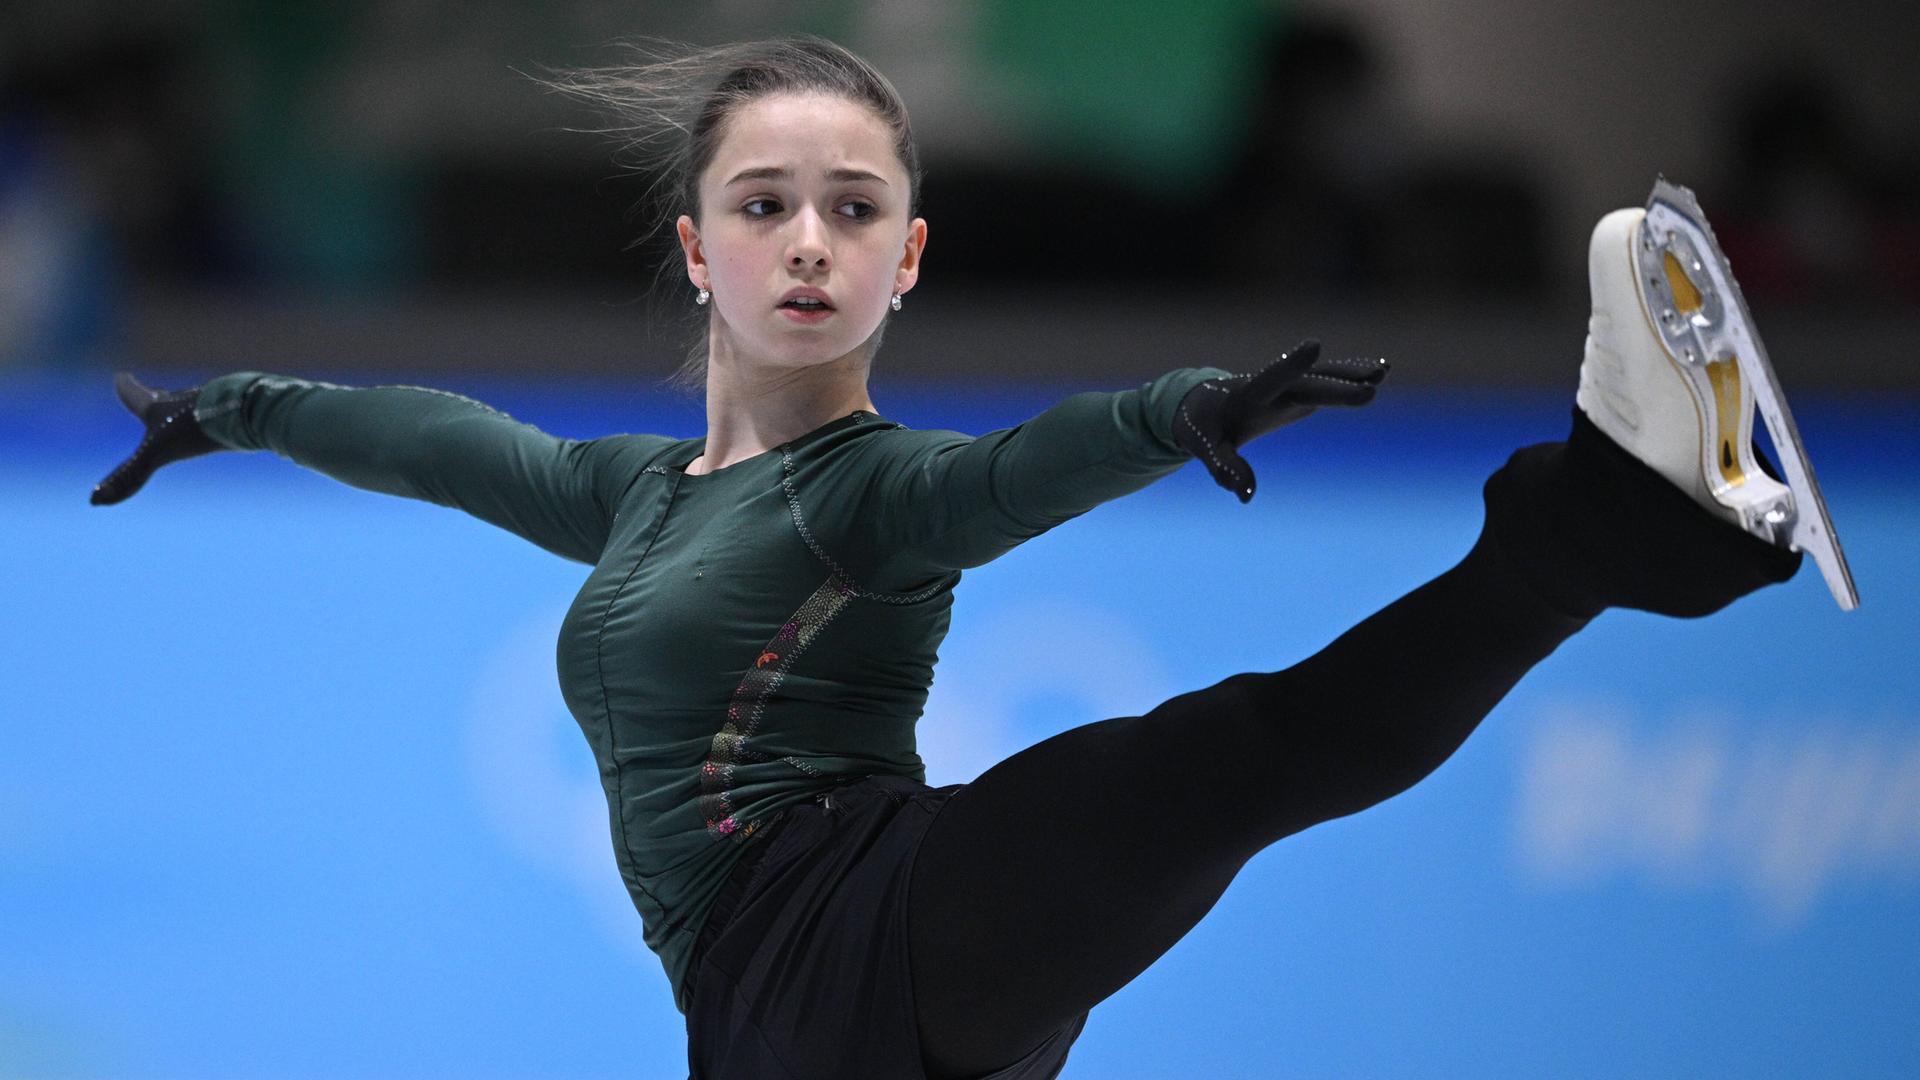 Kamila Walijewa beim Training in Peking am 10. Februar 2022.